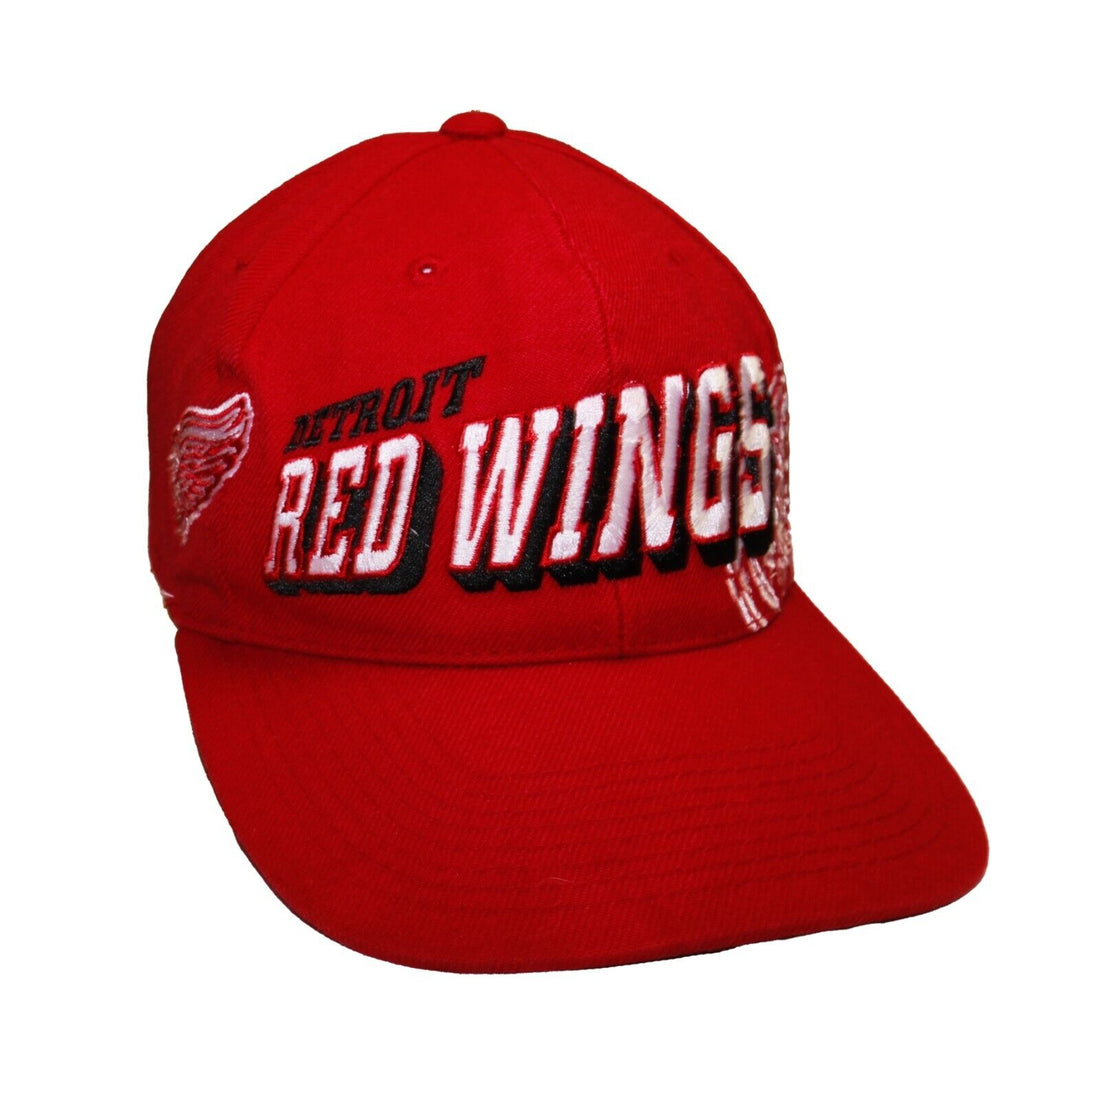 Vintage Detroit Redwings Grid Sports Specialties Snapback Hat Cap OSFA 90s NHL